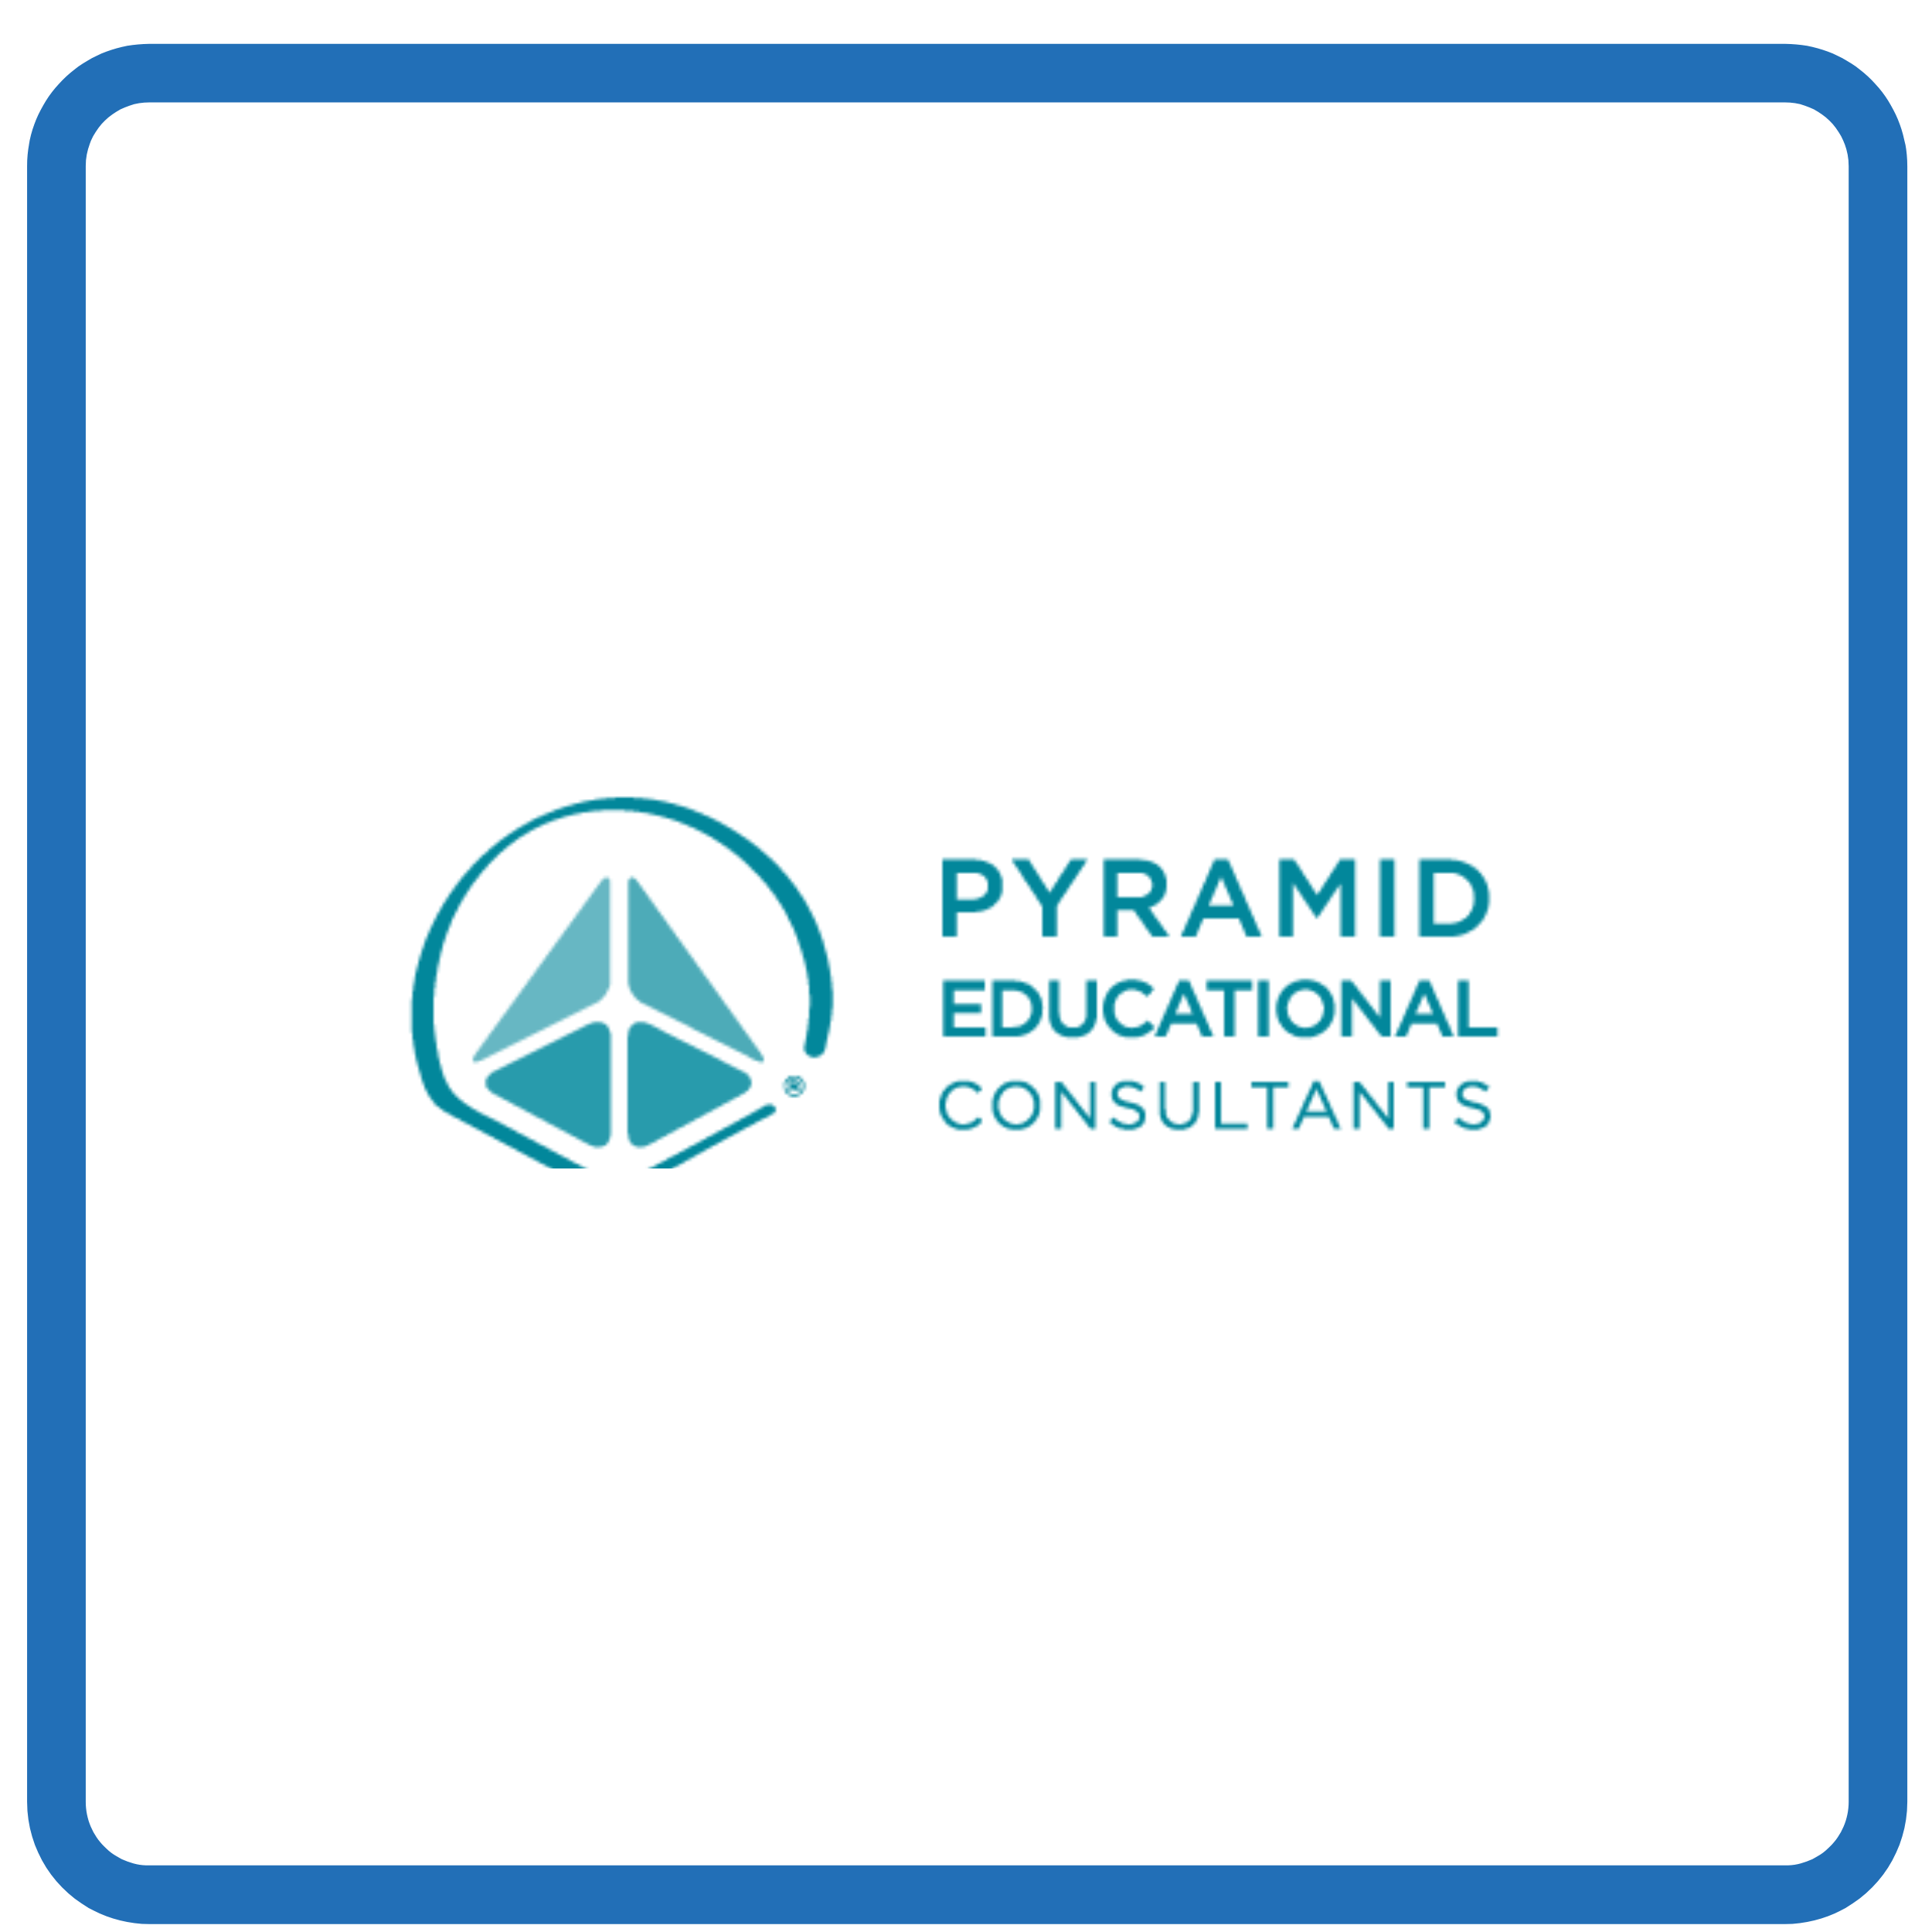 Pyramid Educational Consultants